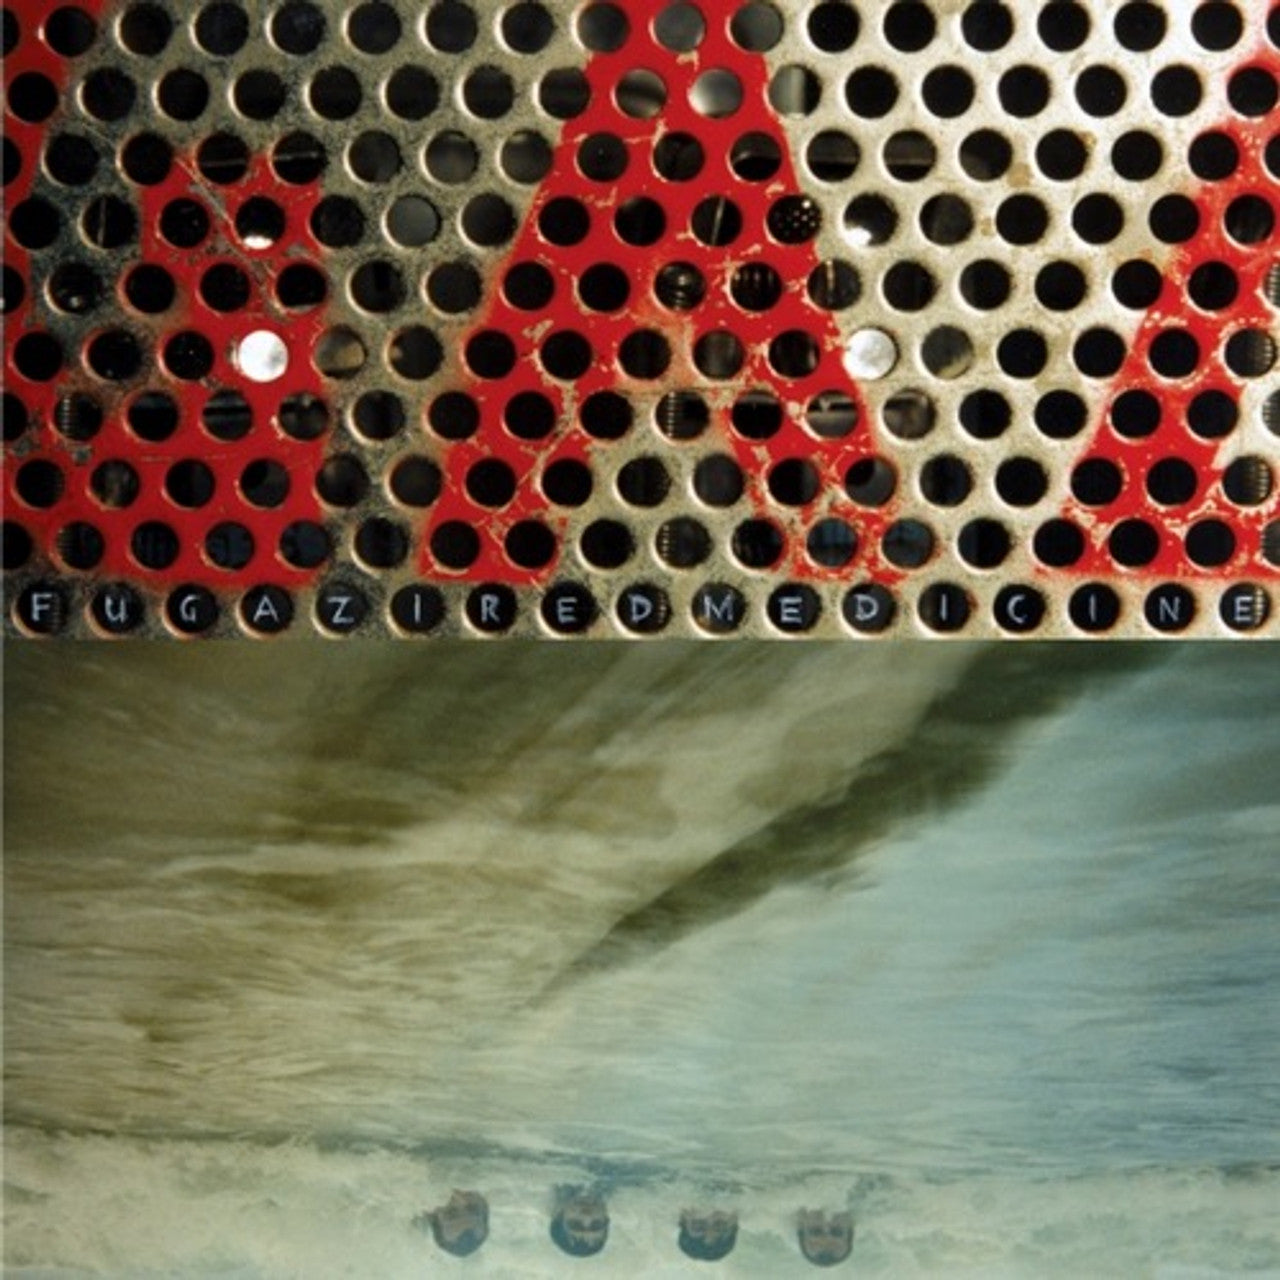 Fugazi - Red Medicine (Red Vinyl)